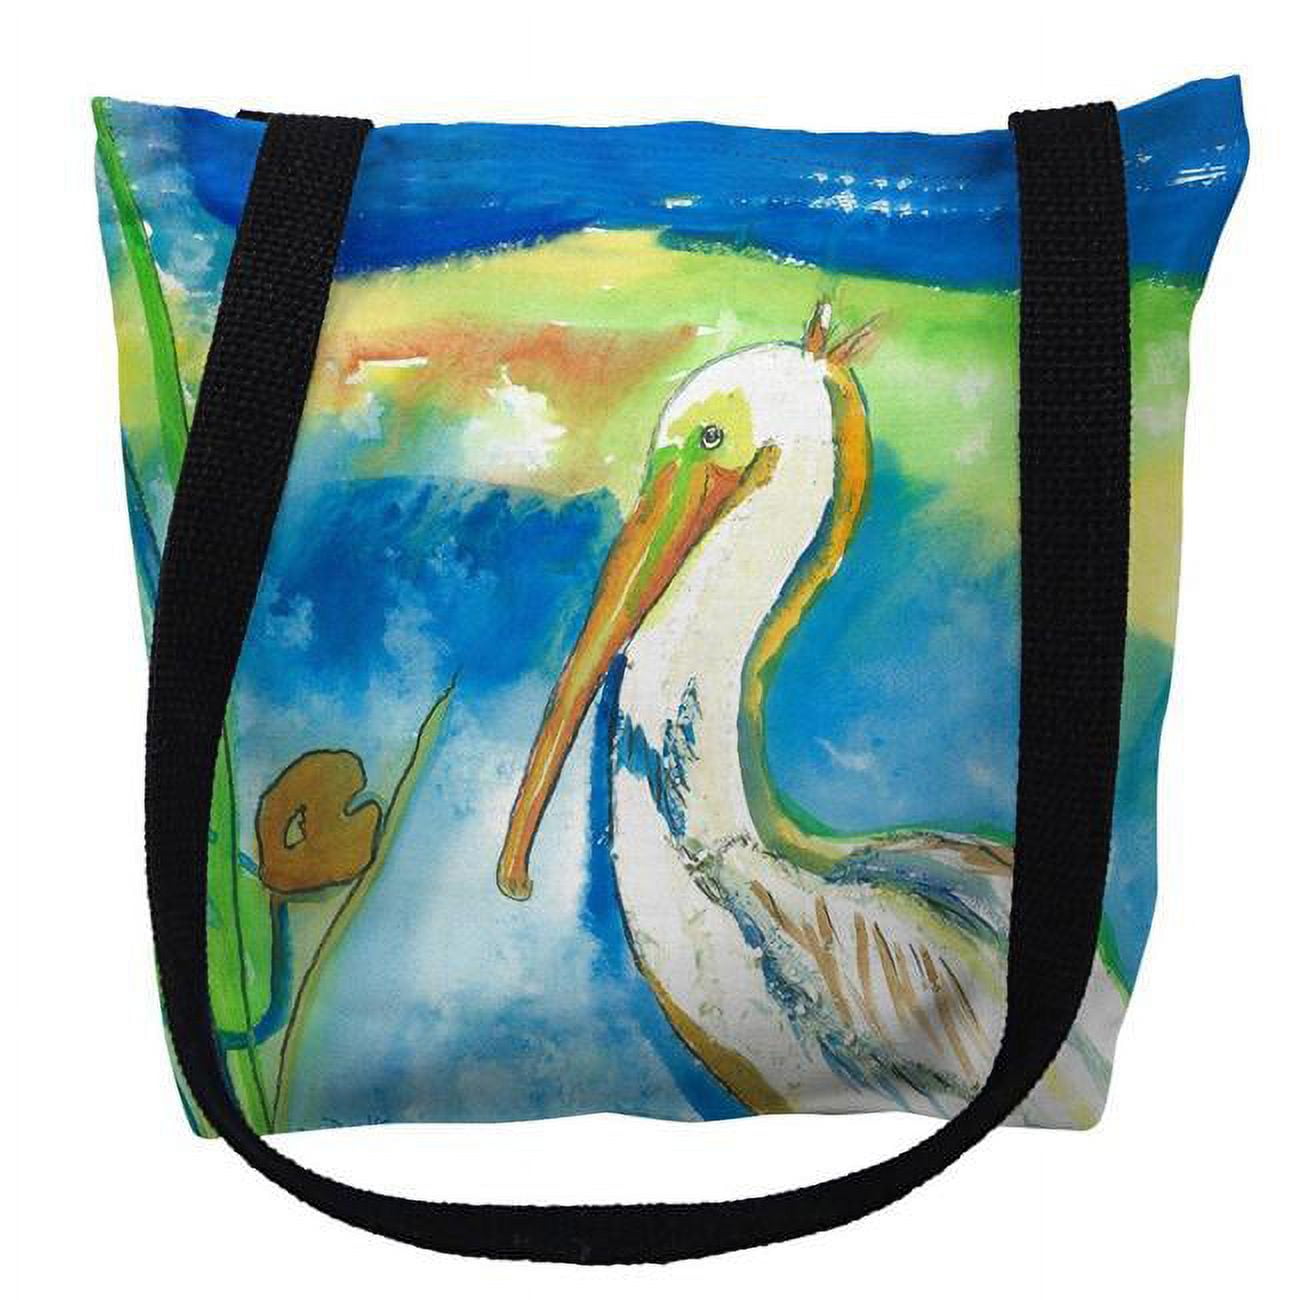 Ty138m 16 X 16 In. White Pelican Tote Bag - Medium